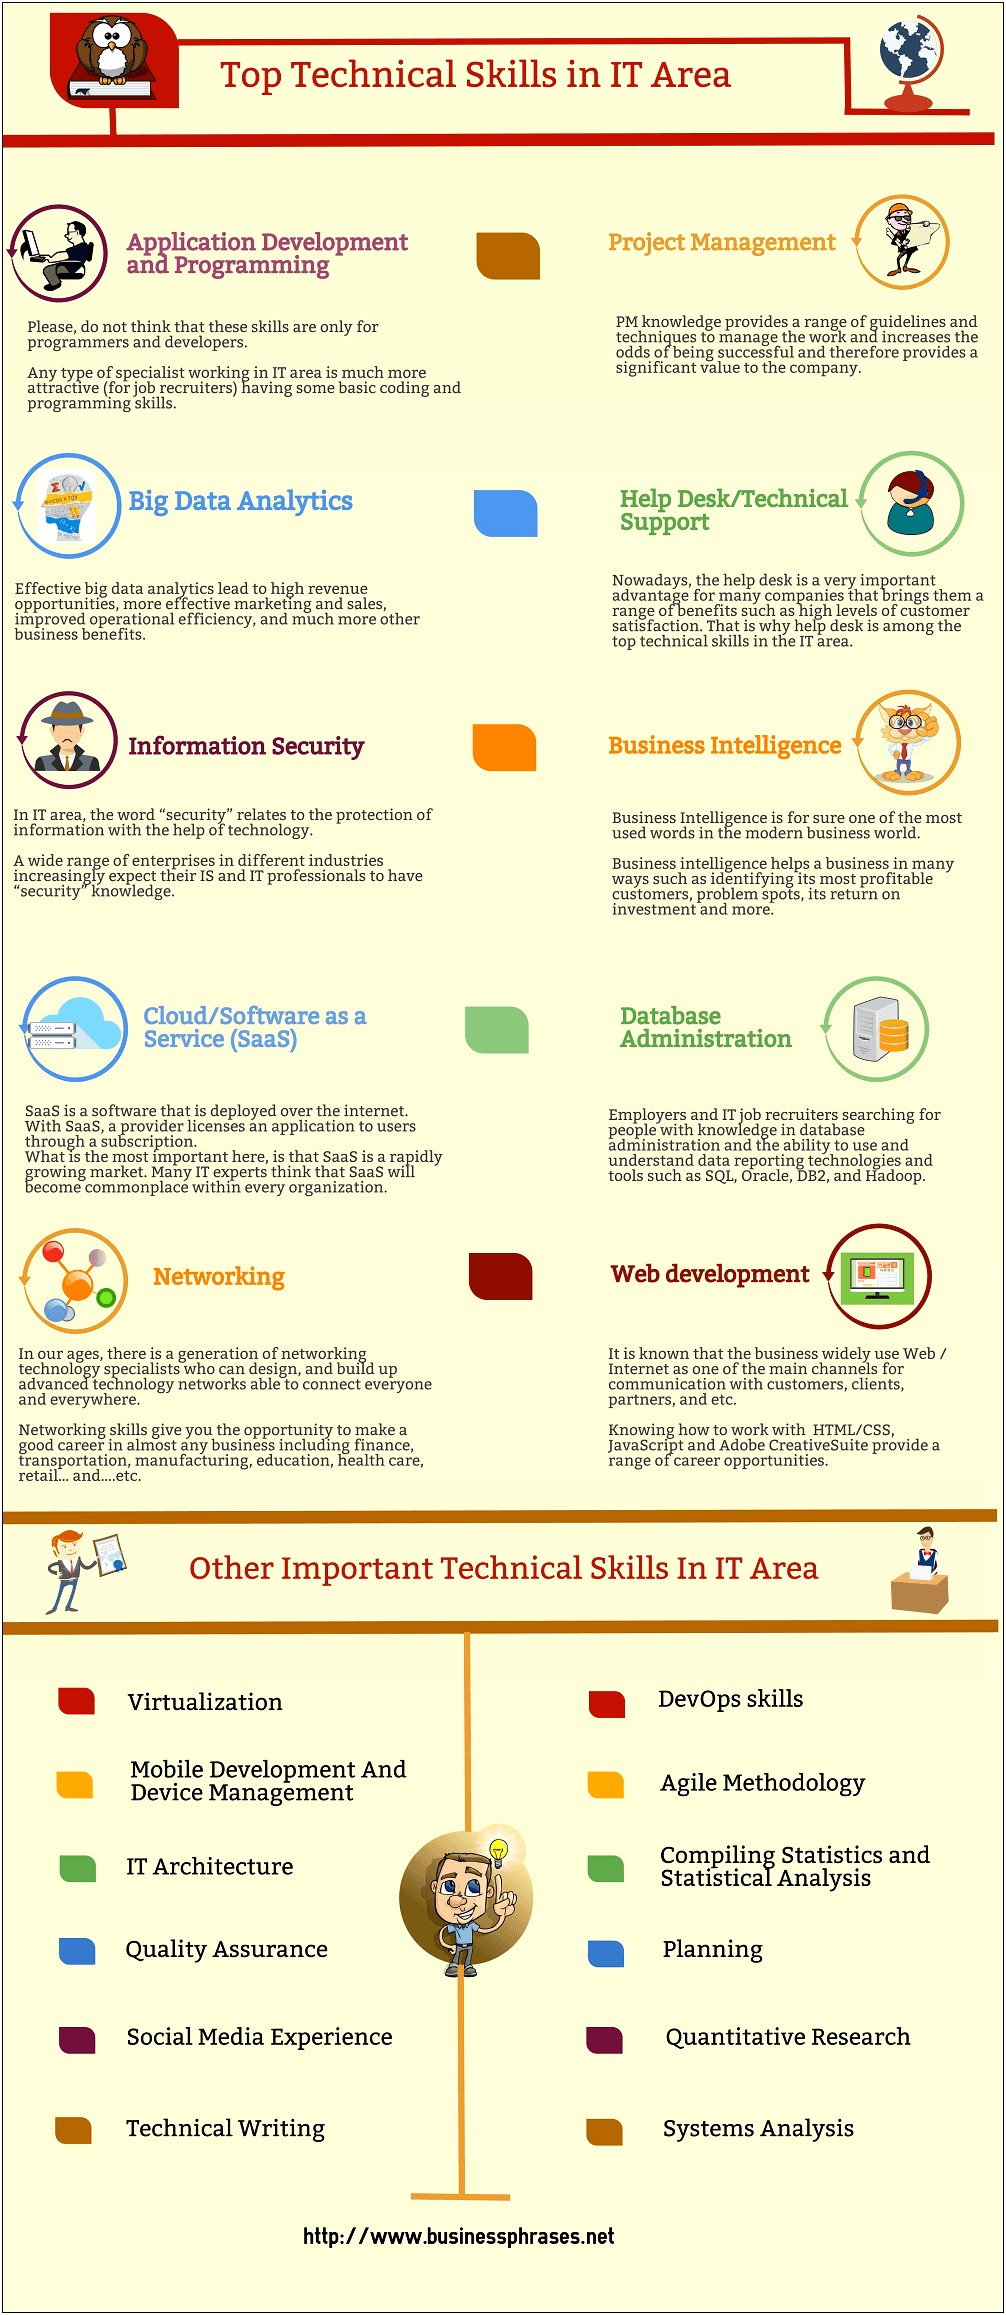 Resume Information Technology List Od Skills